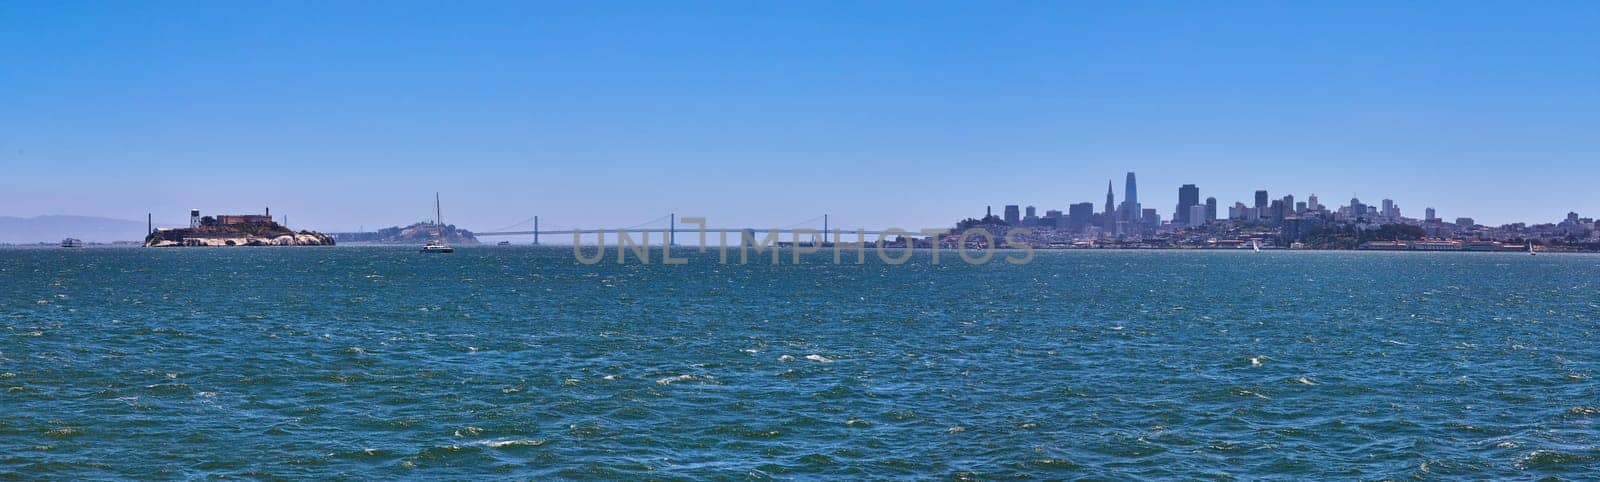 Panorama San Francisco Bay with Alcatraz Island to downtown skyscraper city coastline by njproductions